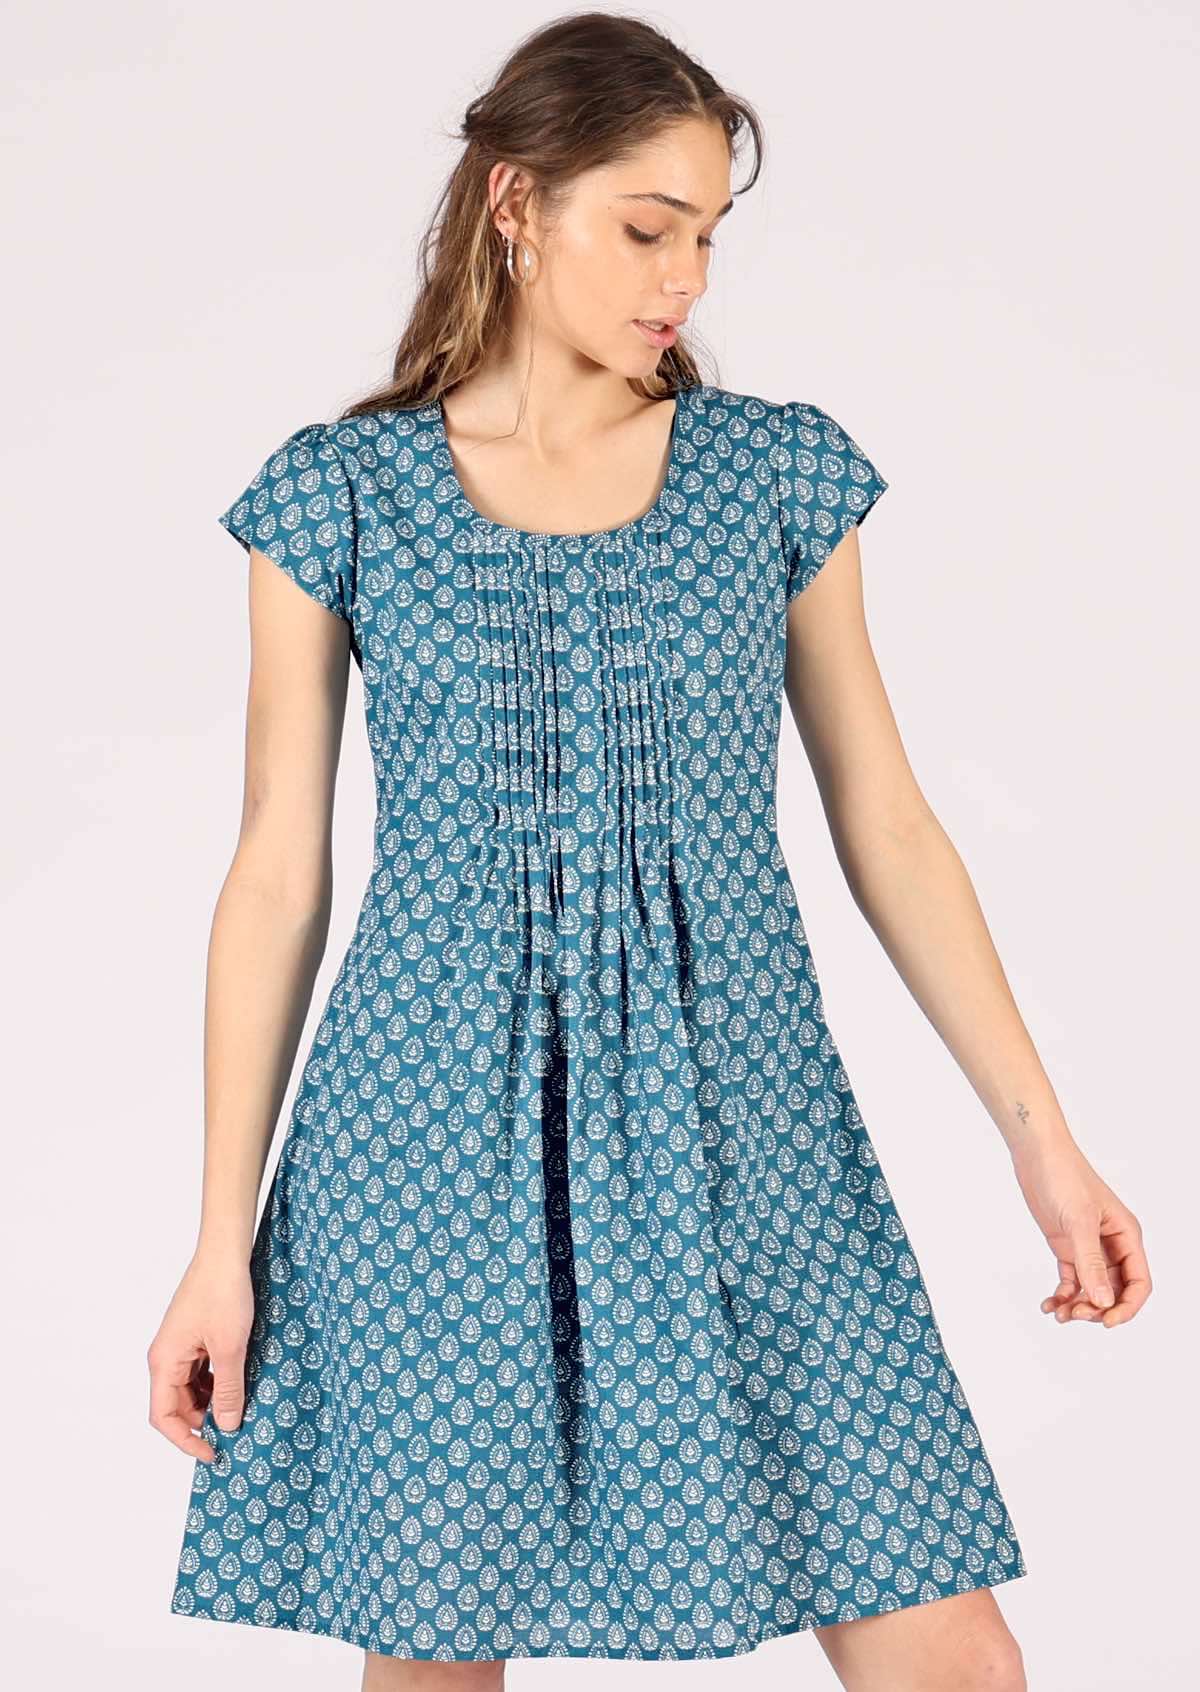 Deep round neckline tiny pleats adorn bodice blue cotton dress